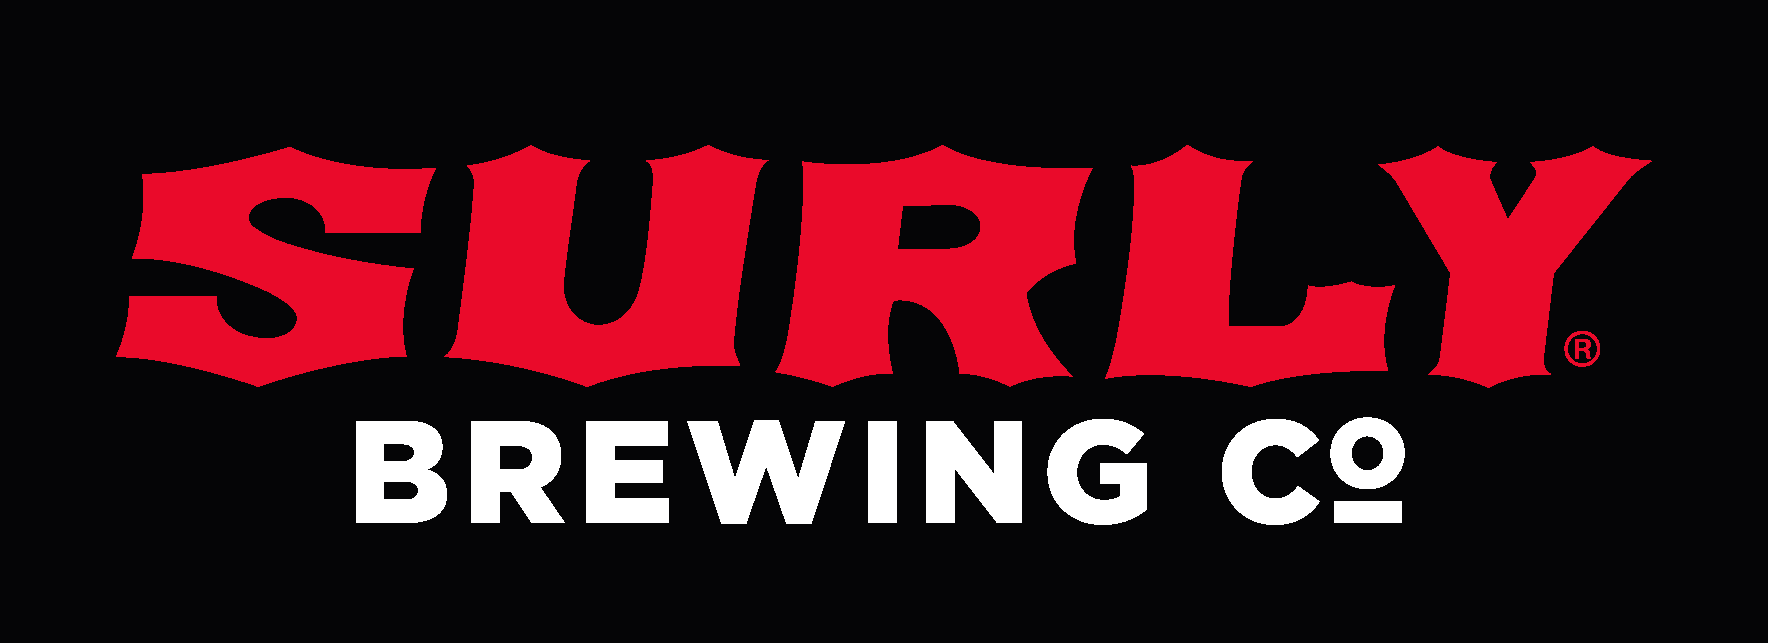 Surly Brewing Logo